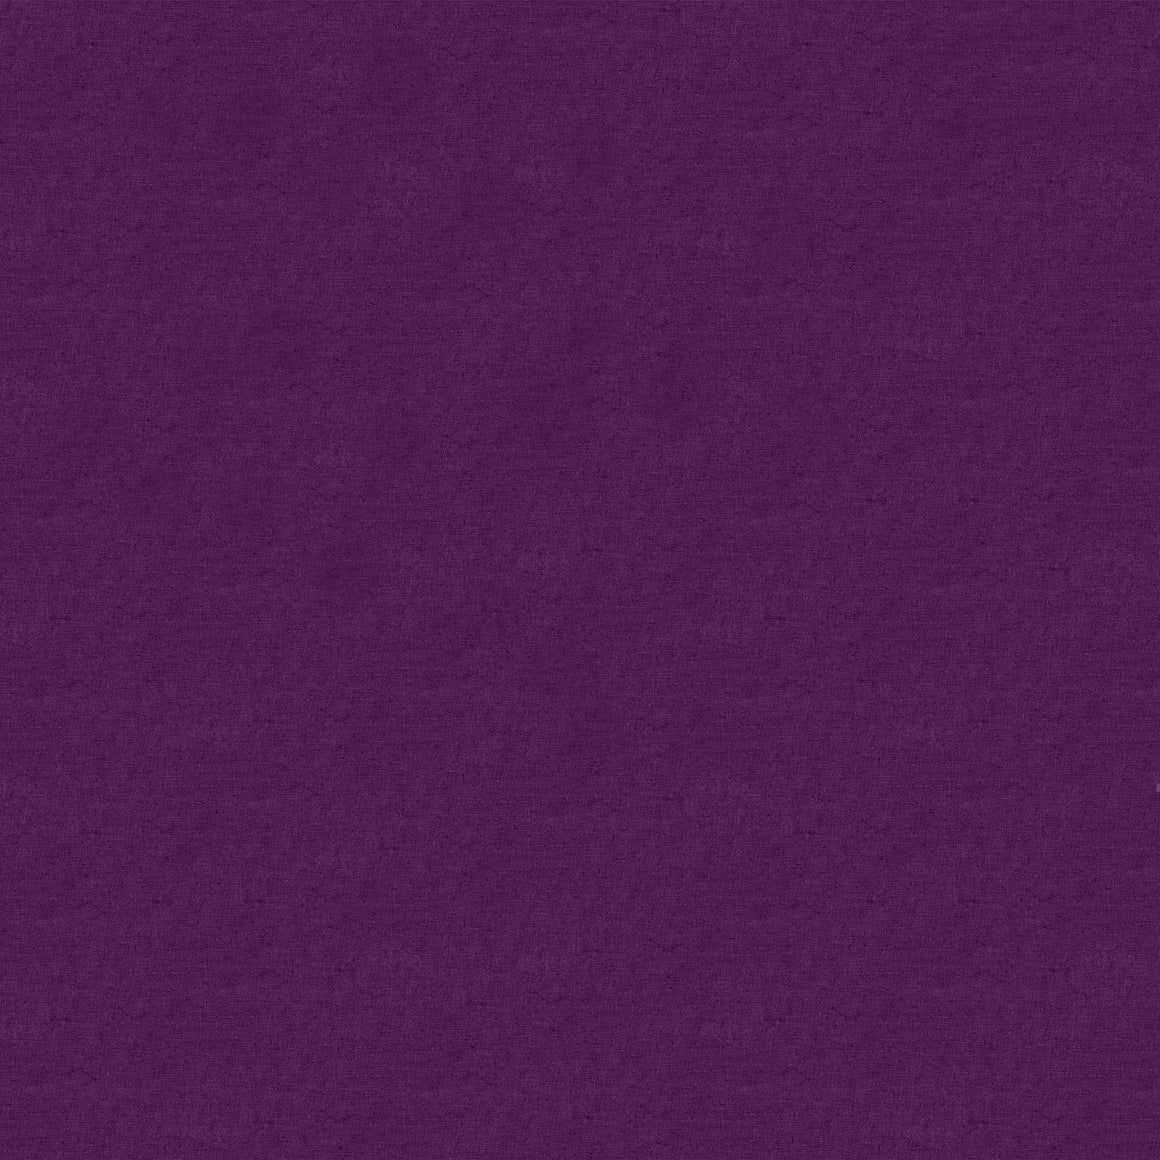 Solid Linen in Purple - Tint for FIGO fabrics